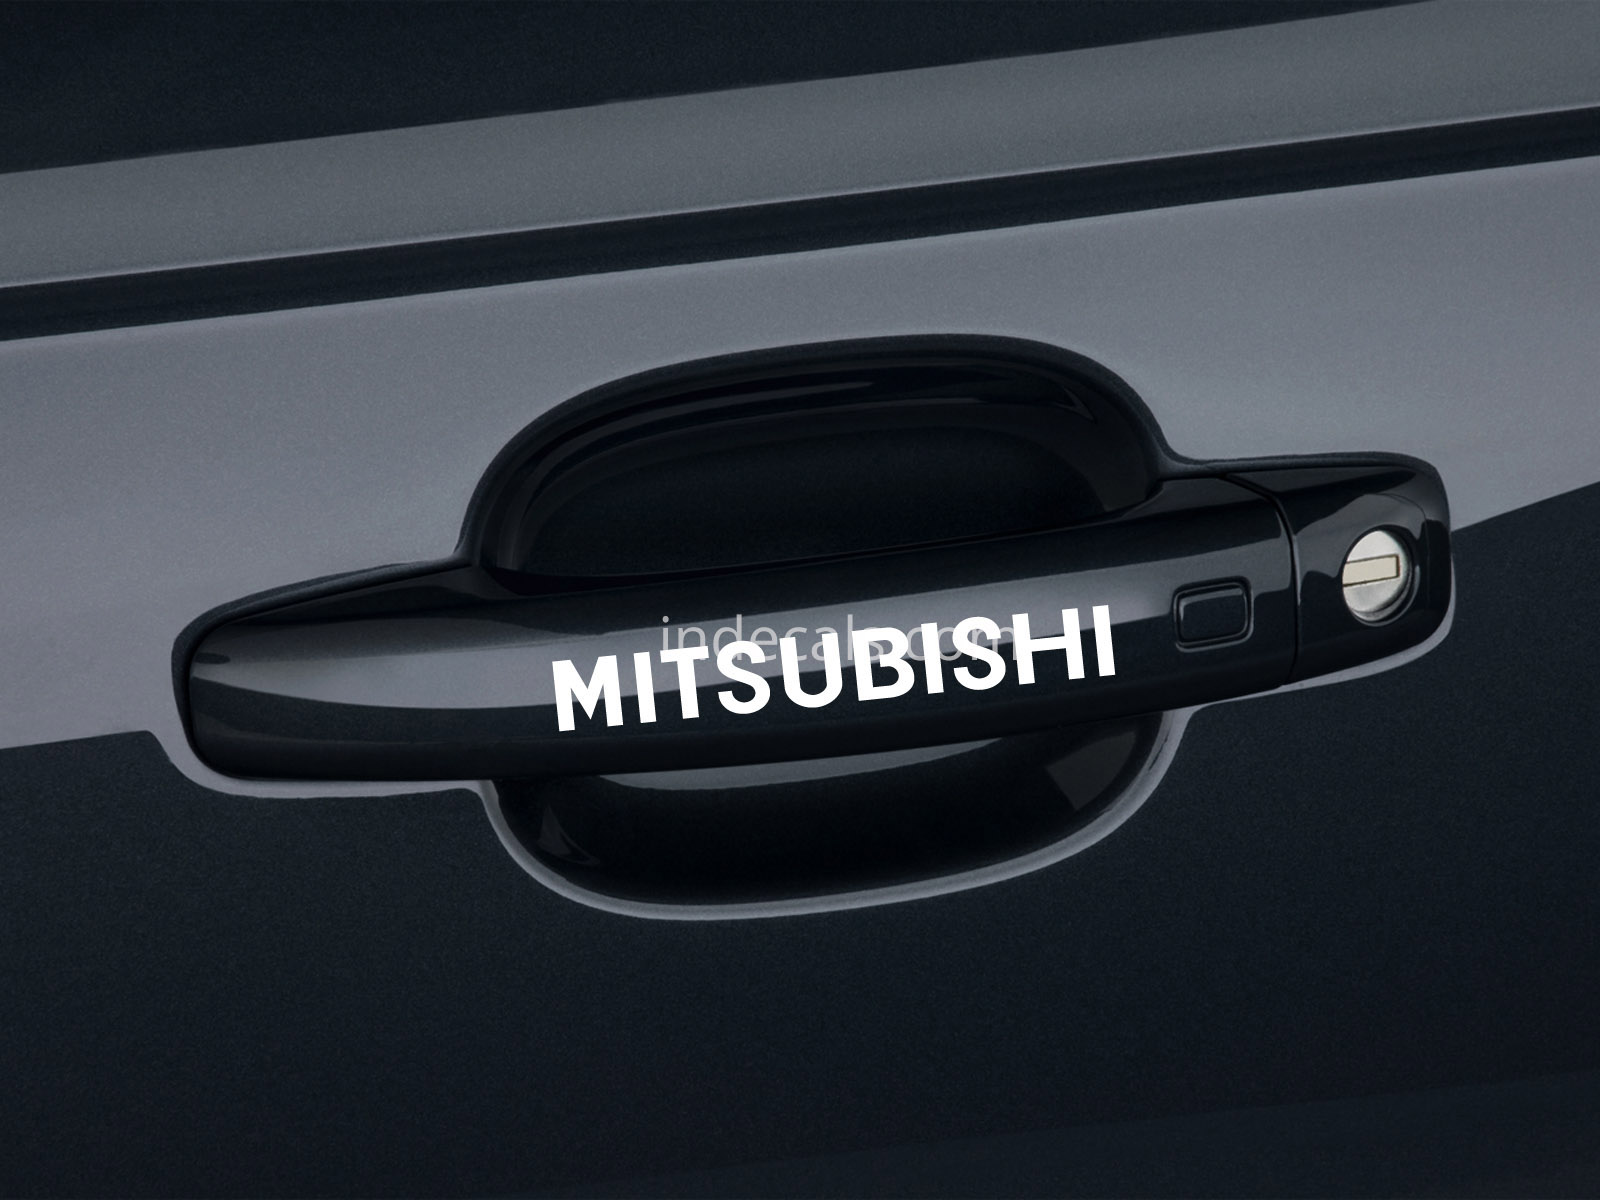 6 x Mitsubishi Stickers for Door Handles - White